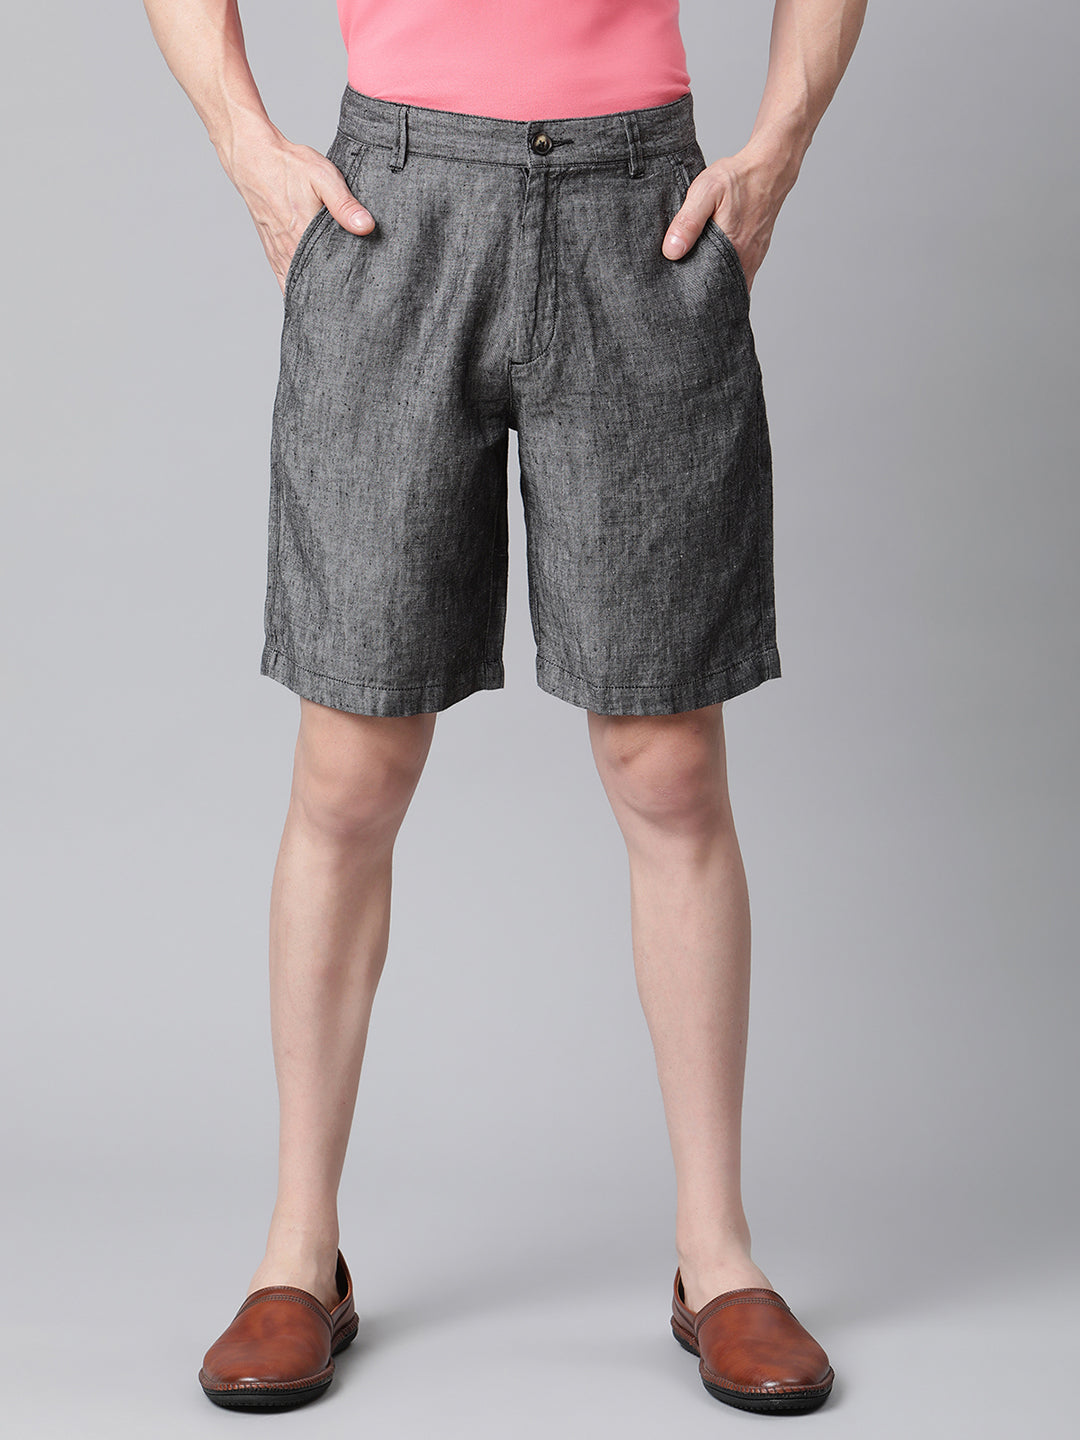 Harsam Men Charcoal Solid Shorts